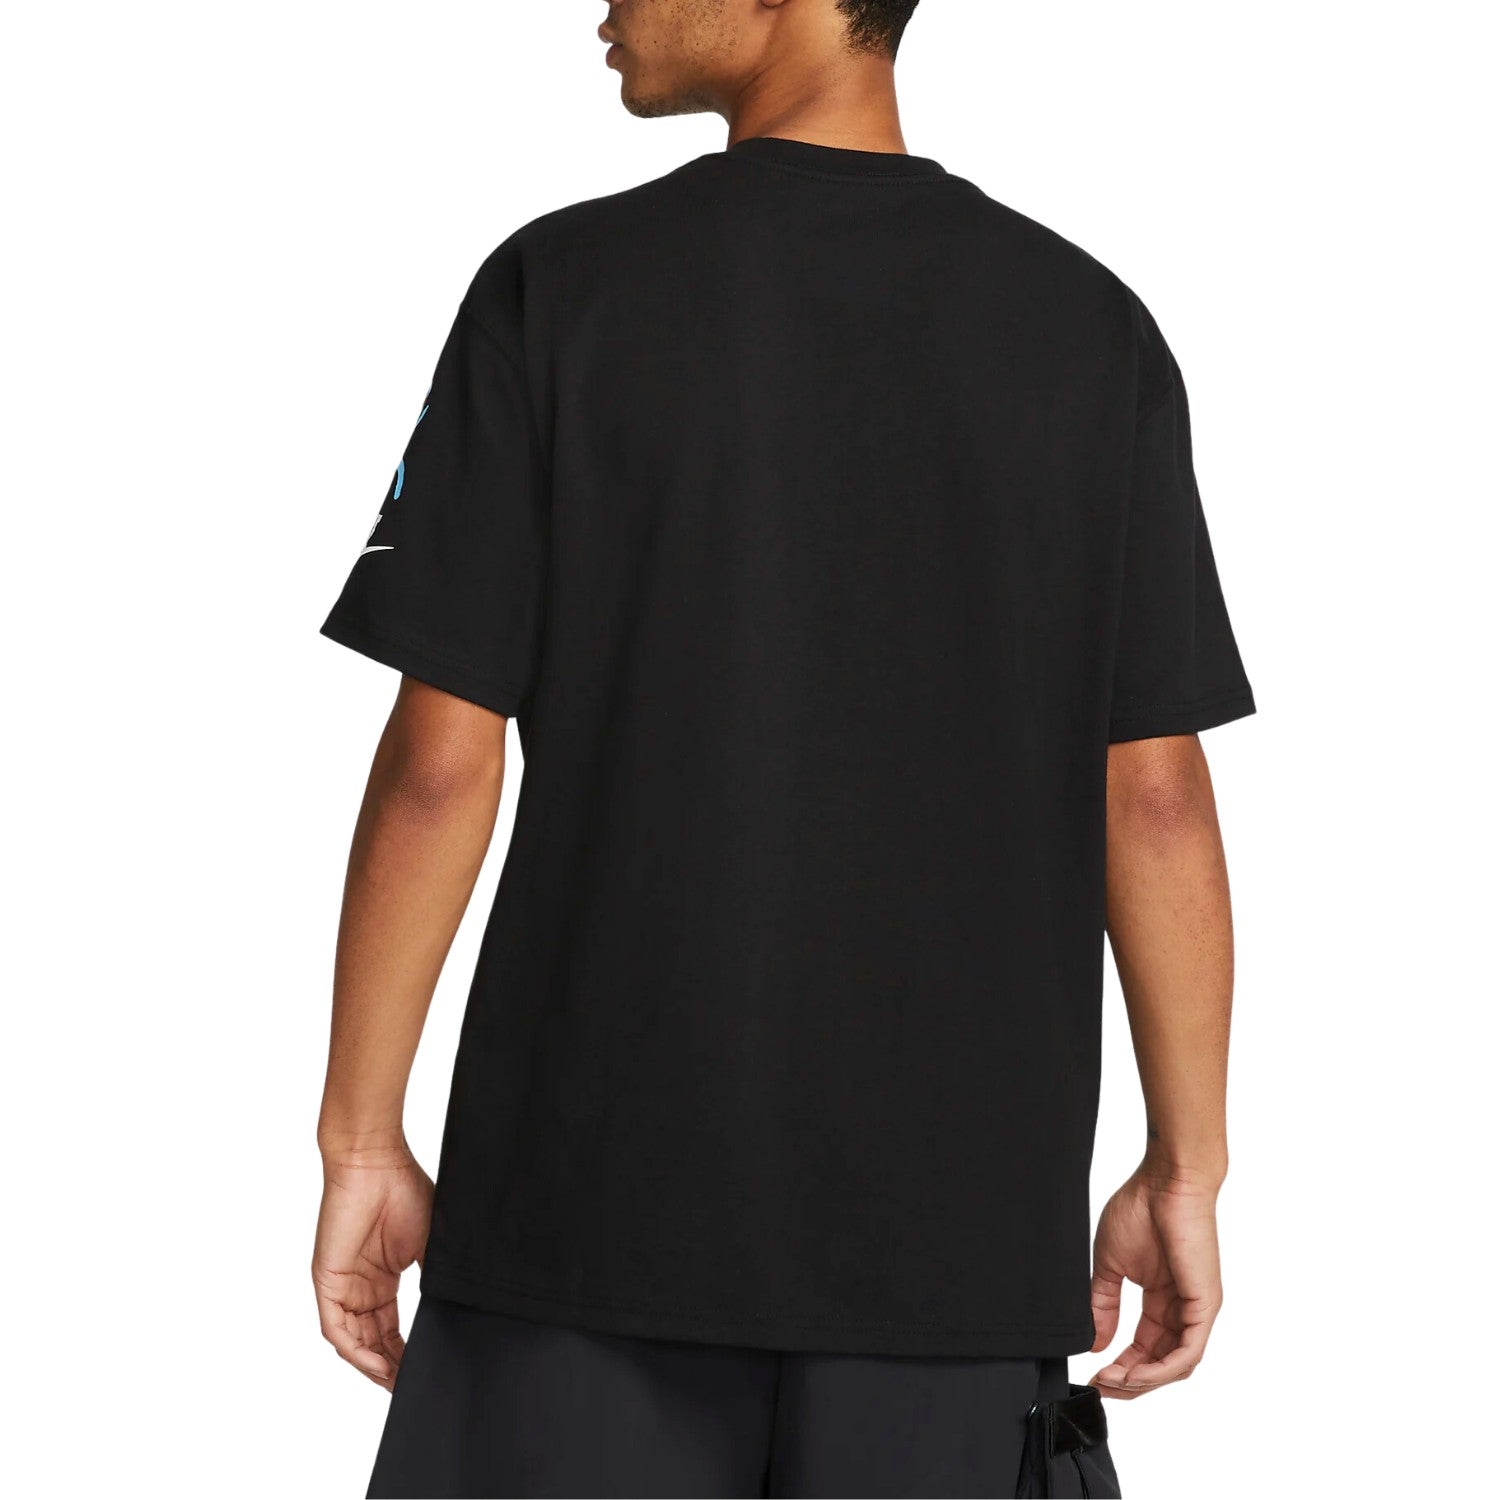 Nike Sportswear T-shirt Mens Style : Dz2850